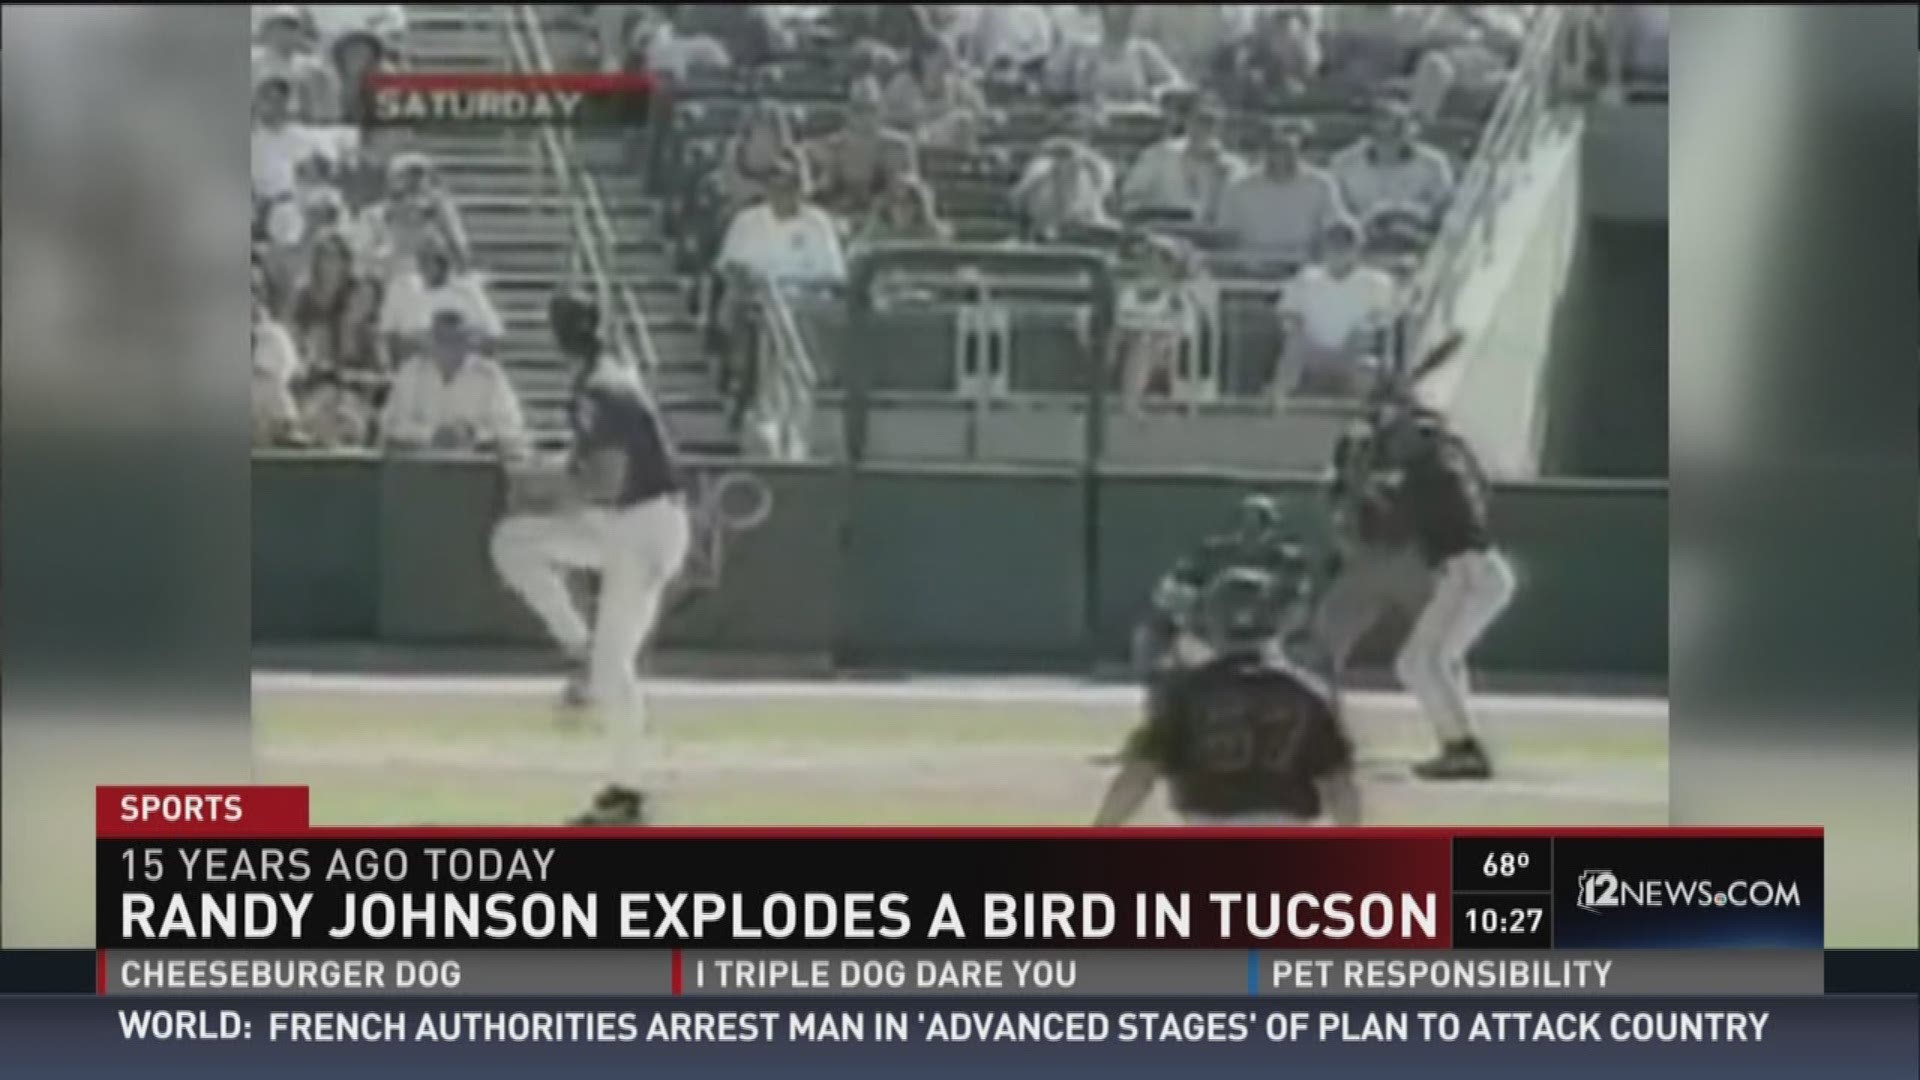 Happy 15th anniversary of Randy Johnson's bird explosion